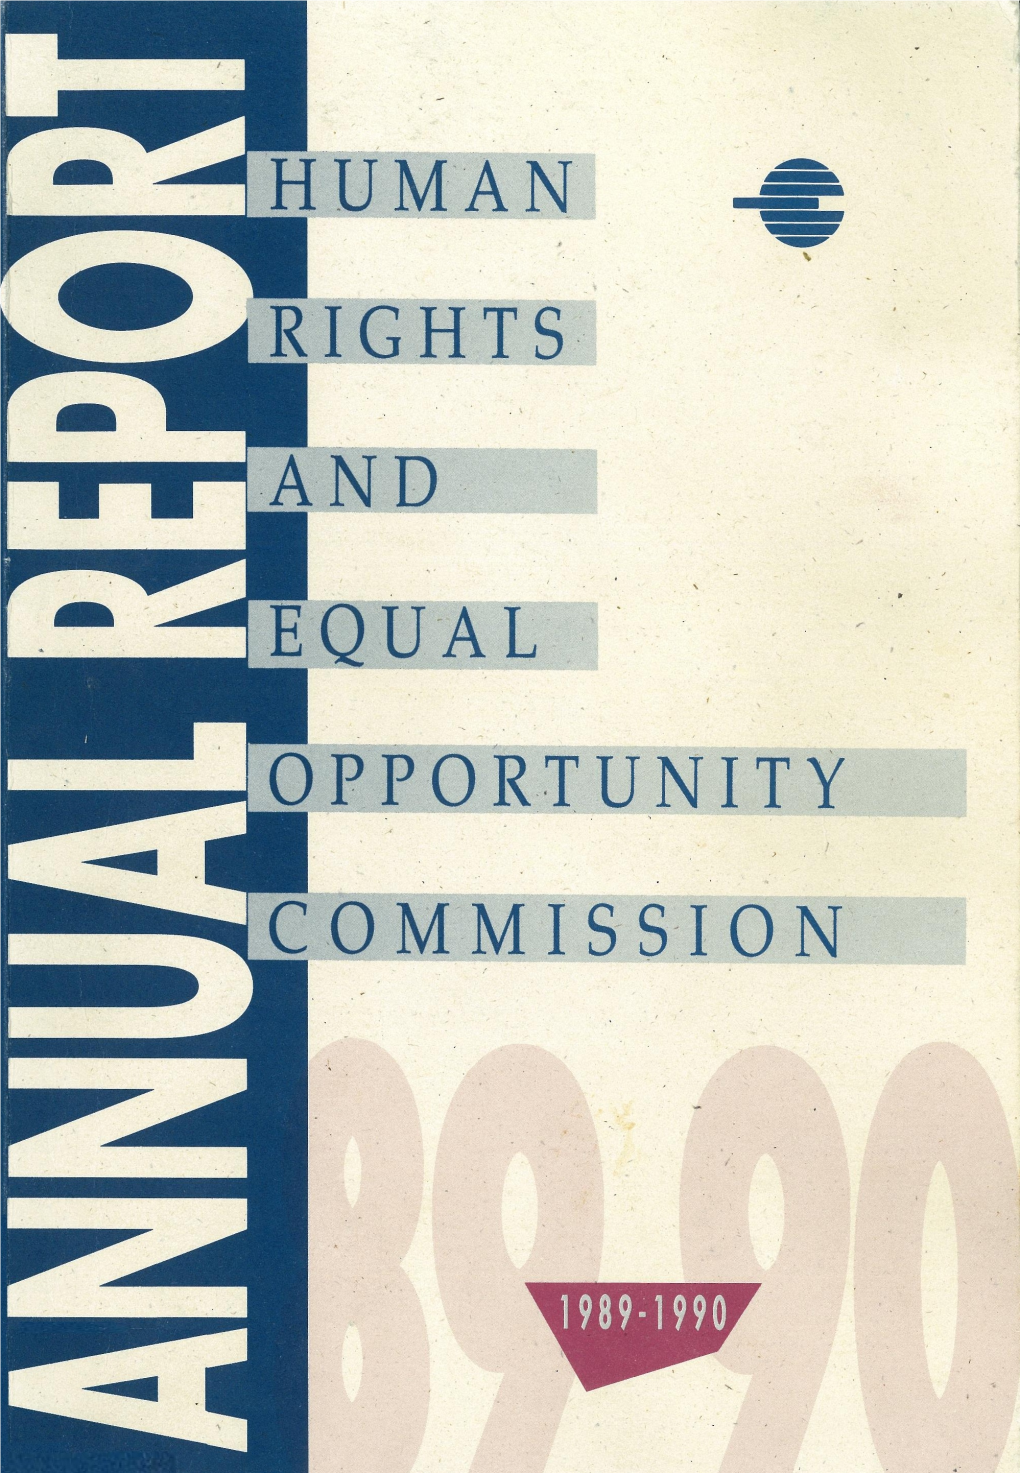 Annual Report 1989-90